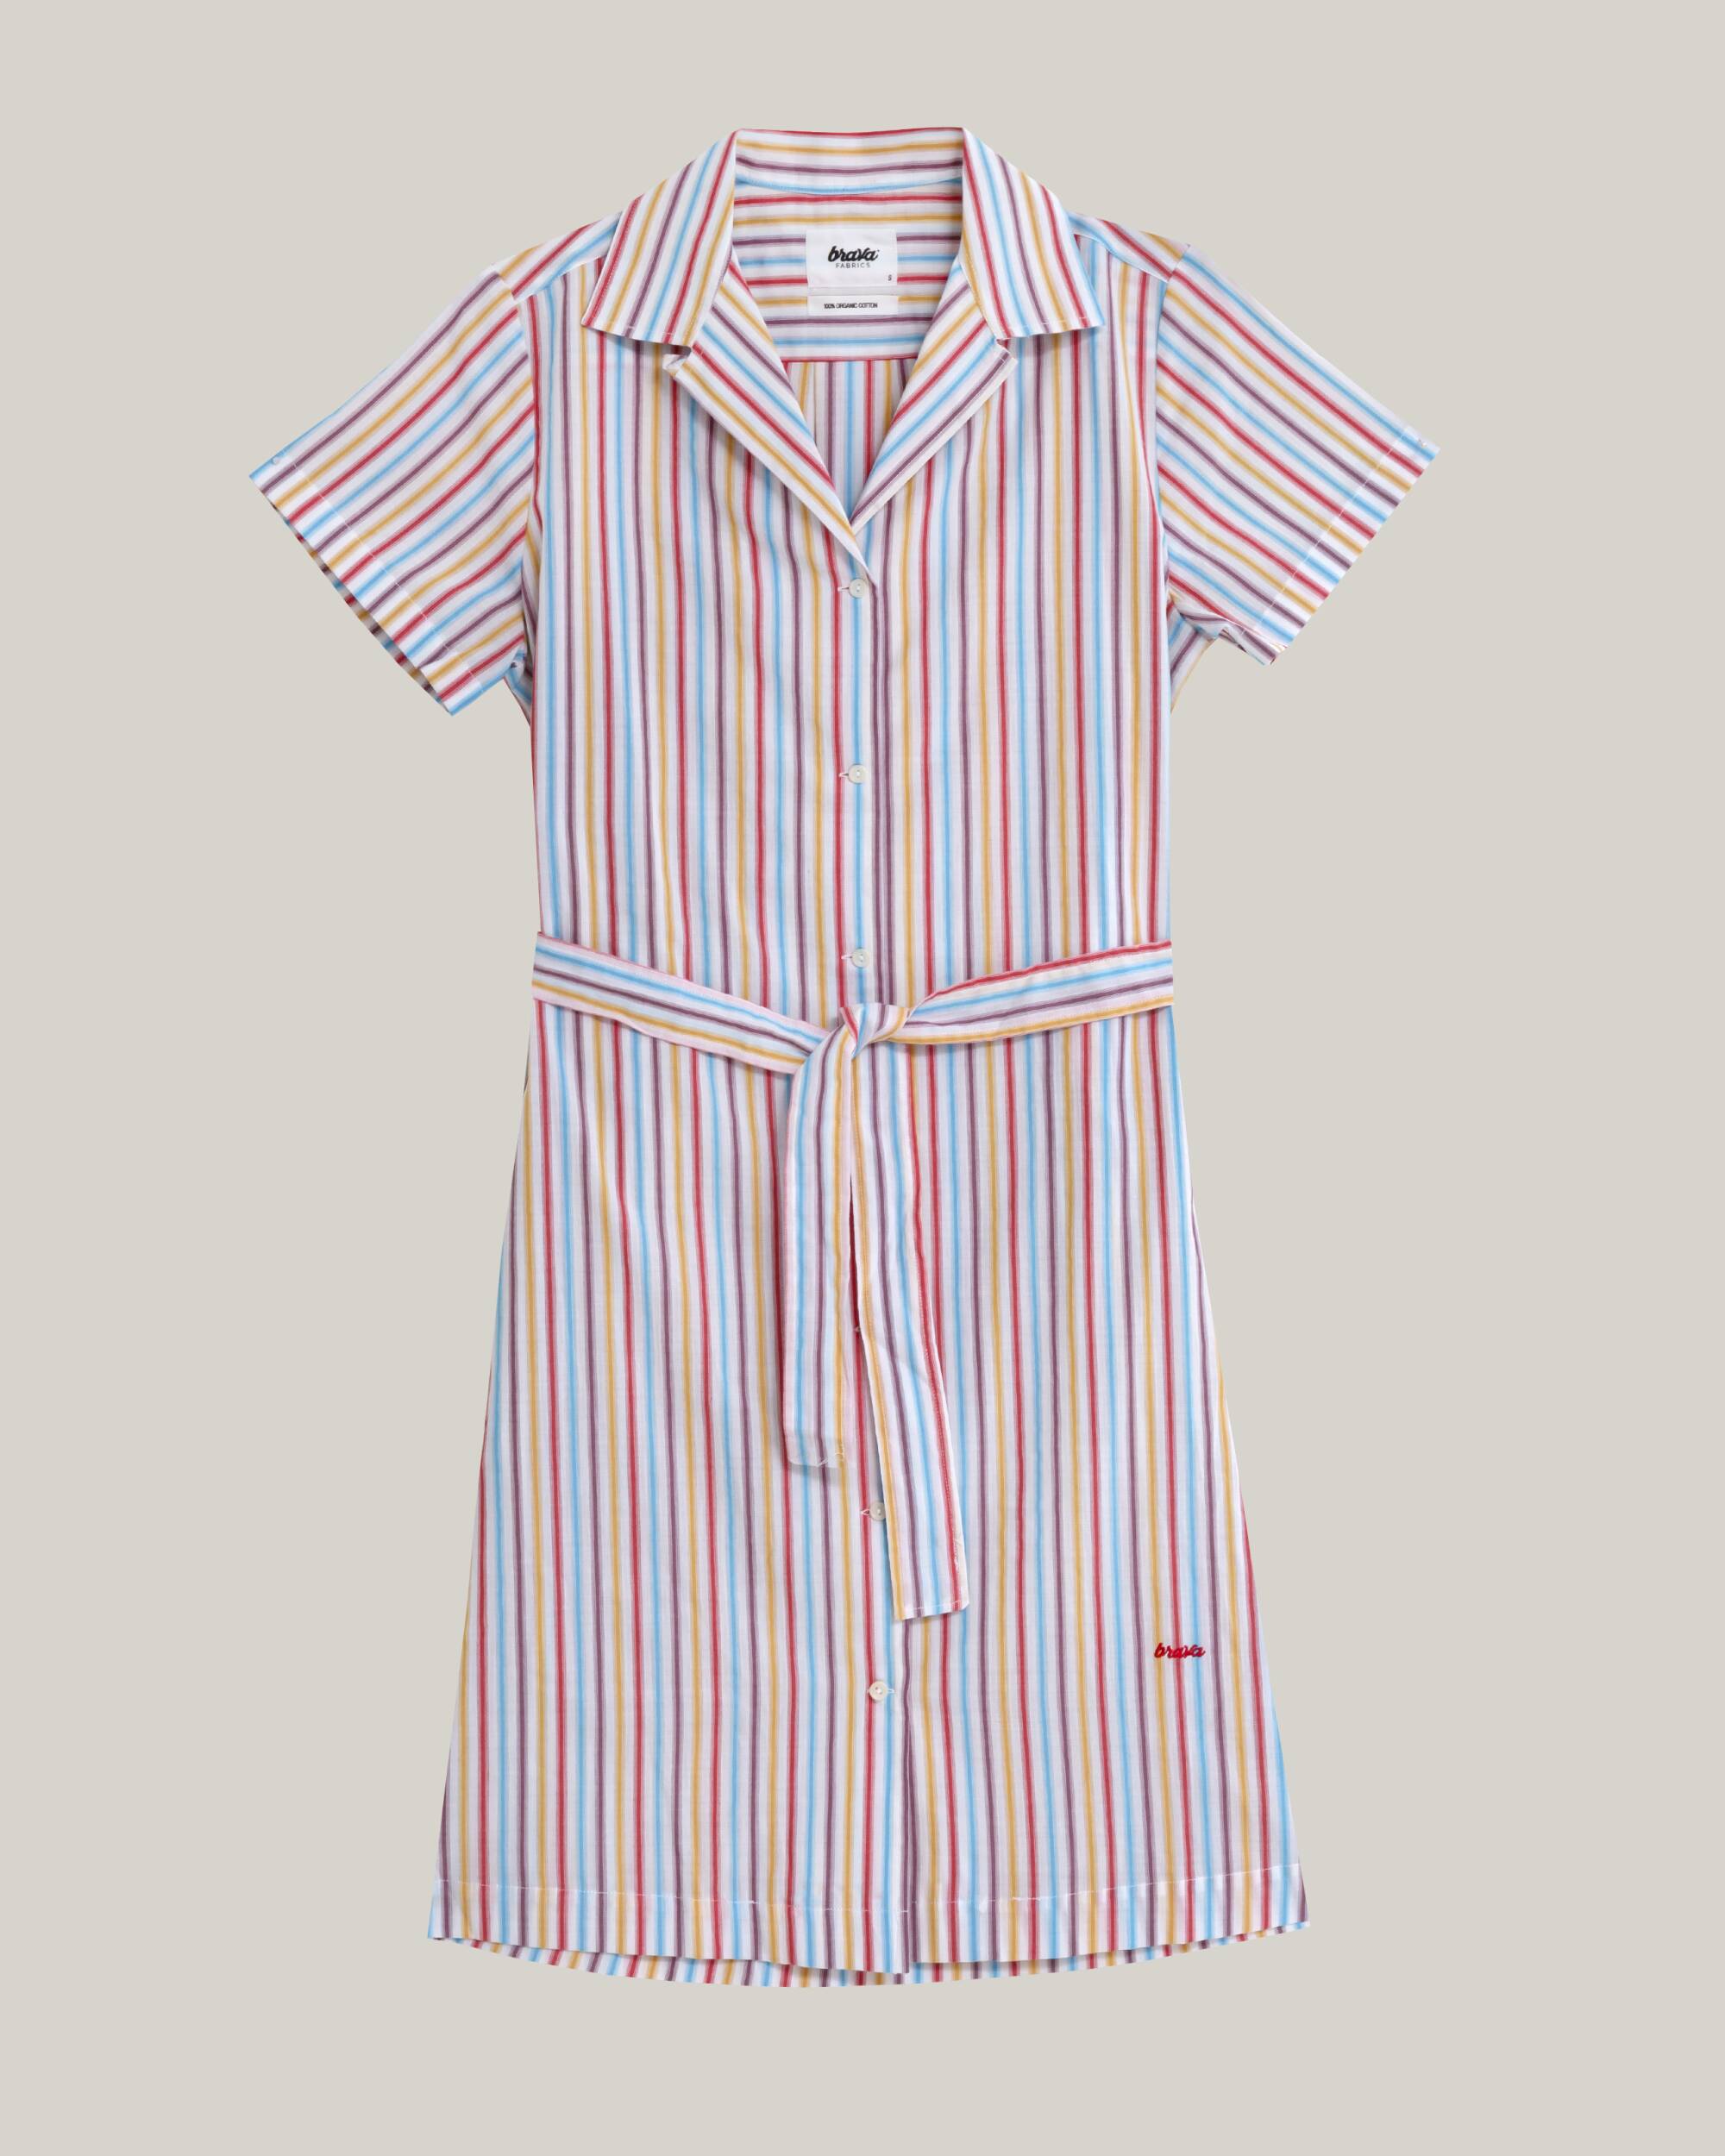 Dress "Downtown Stripes" made of 100% organic cotton from Brava Fabrics